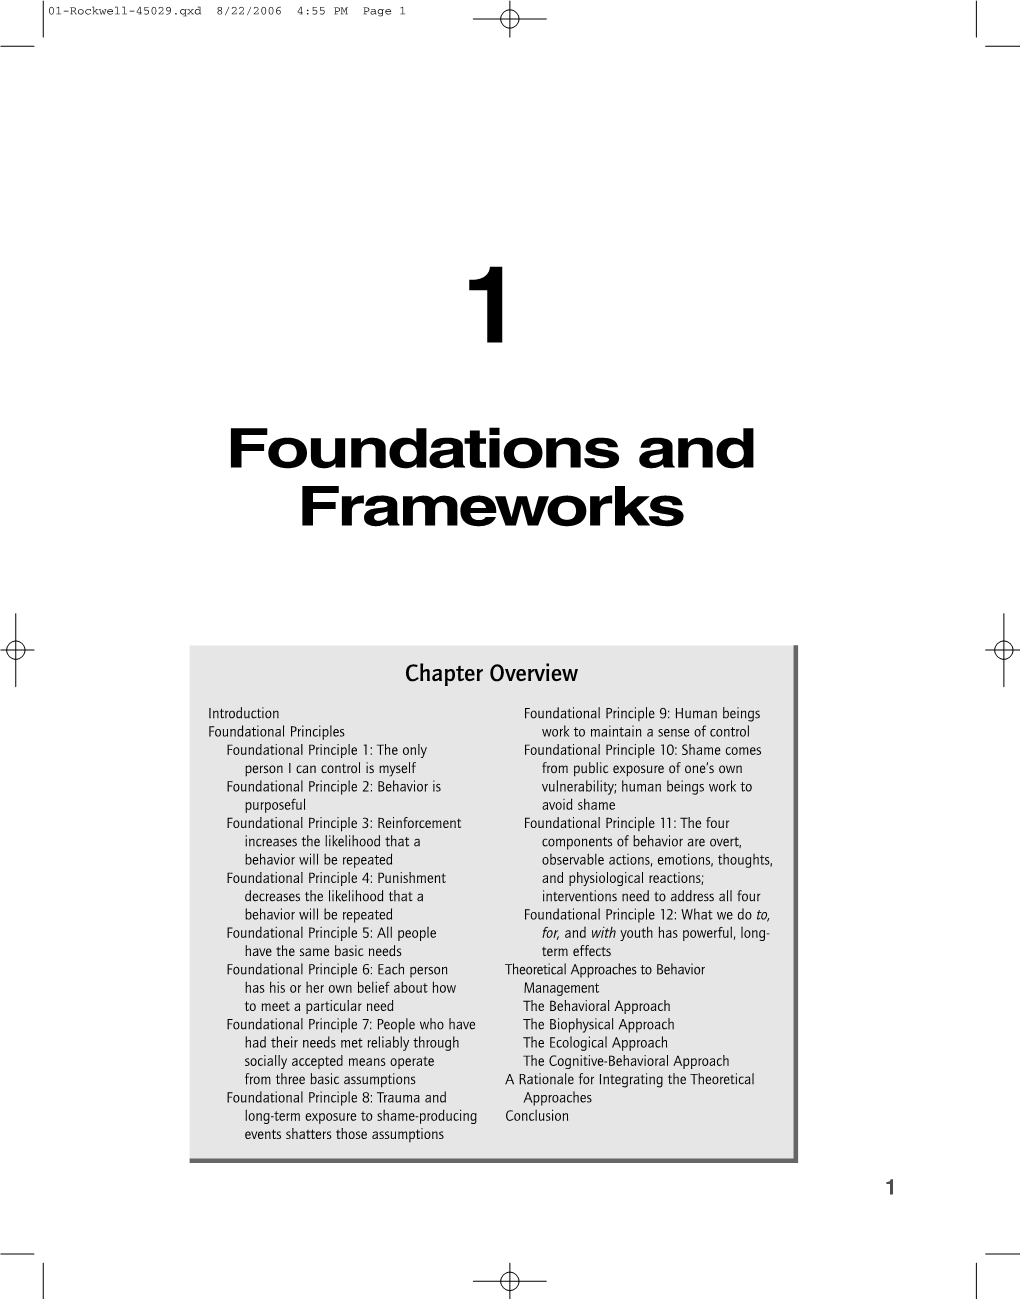 Foundations and Frameworks